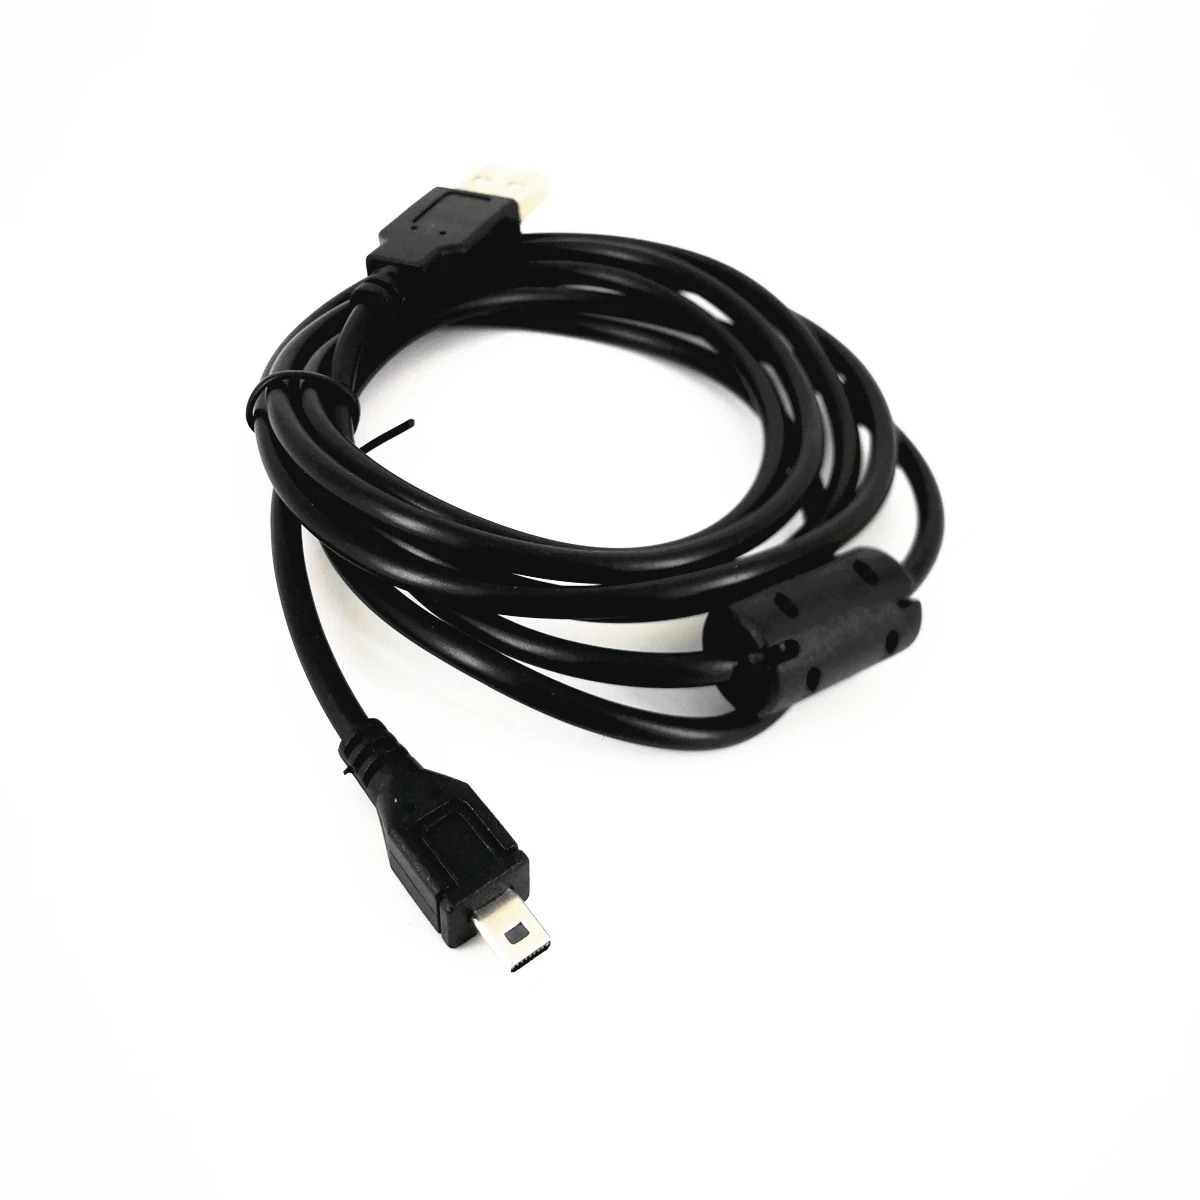 USB DATA CABLE LEAD FOR Digital Camera Panasonic Lumix DMC-FZ5 PHOTO TO PC/MAC 